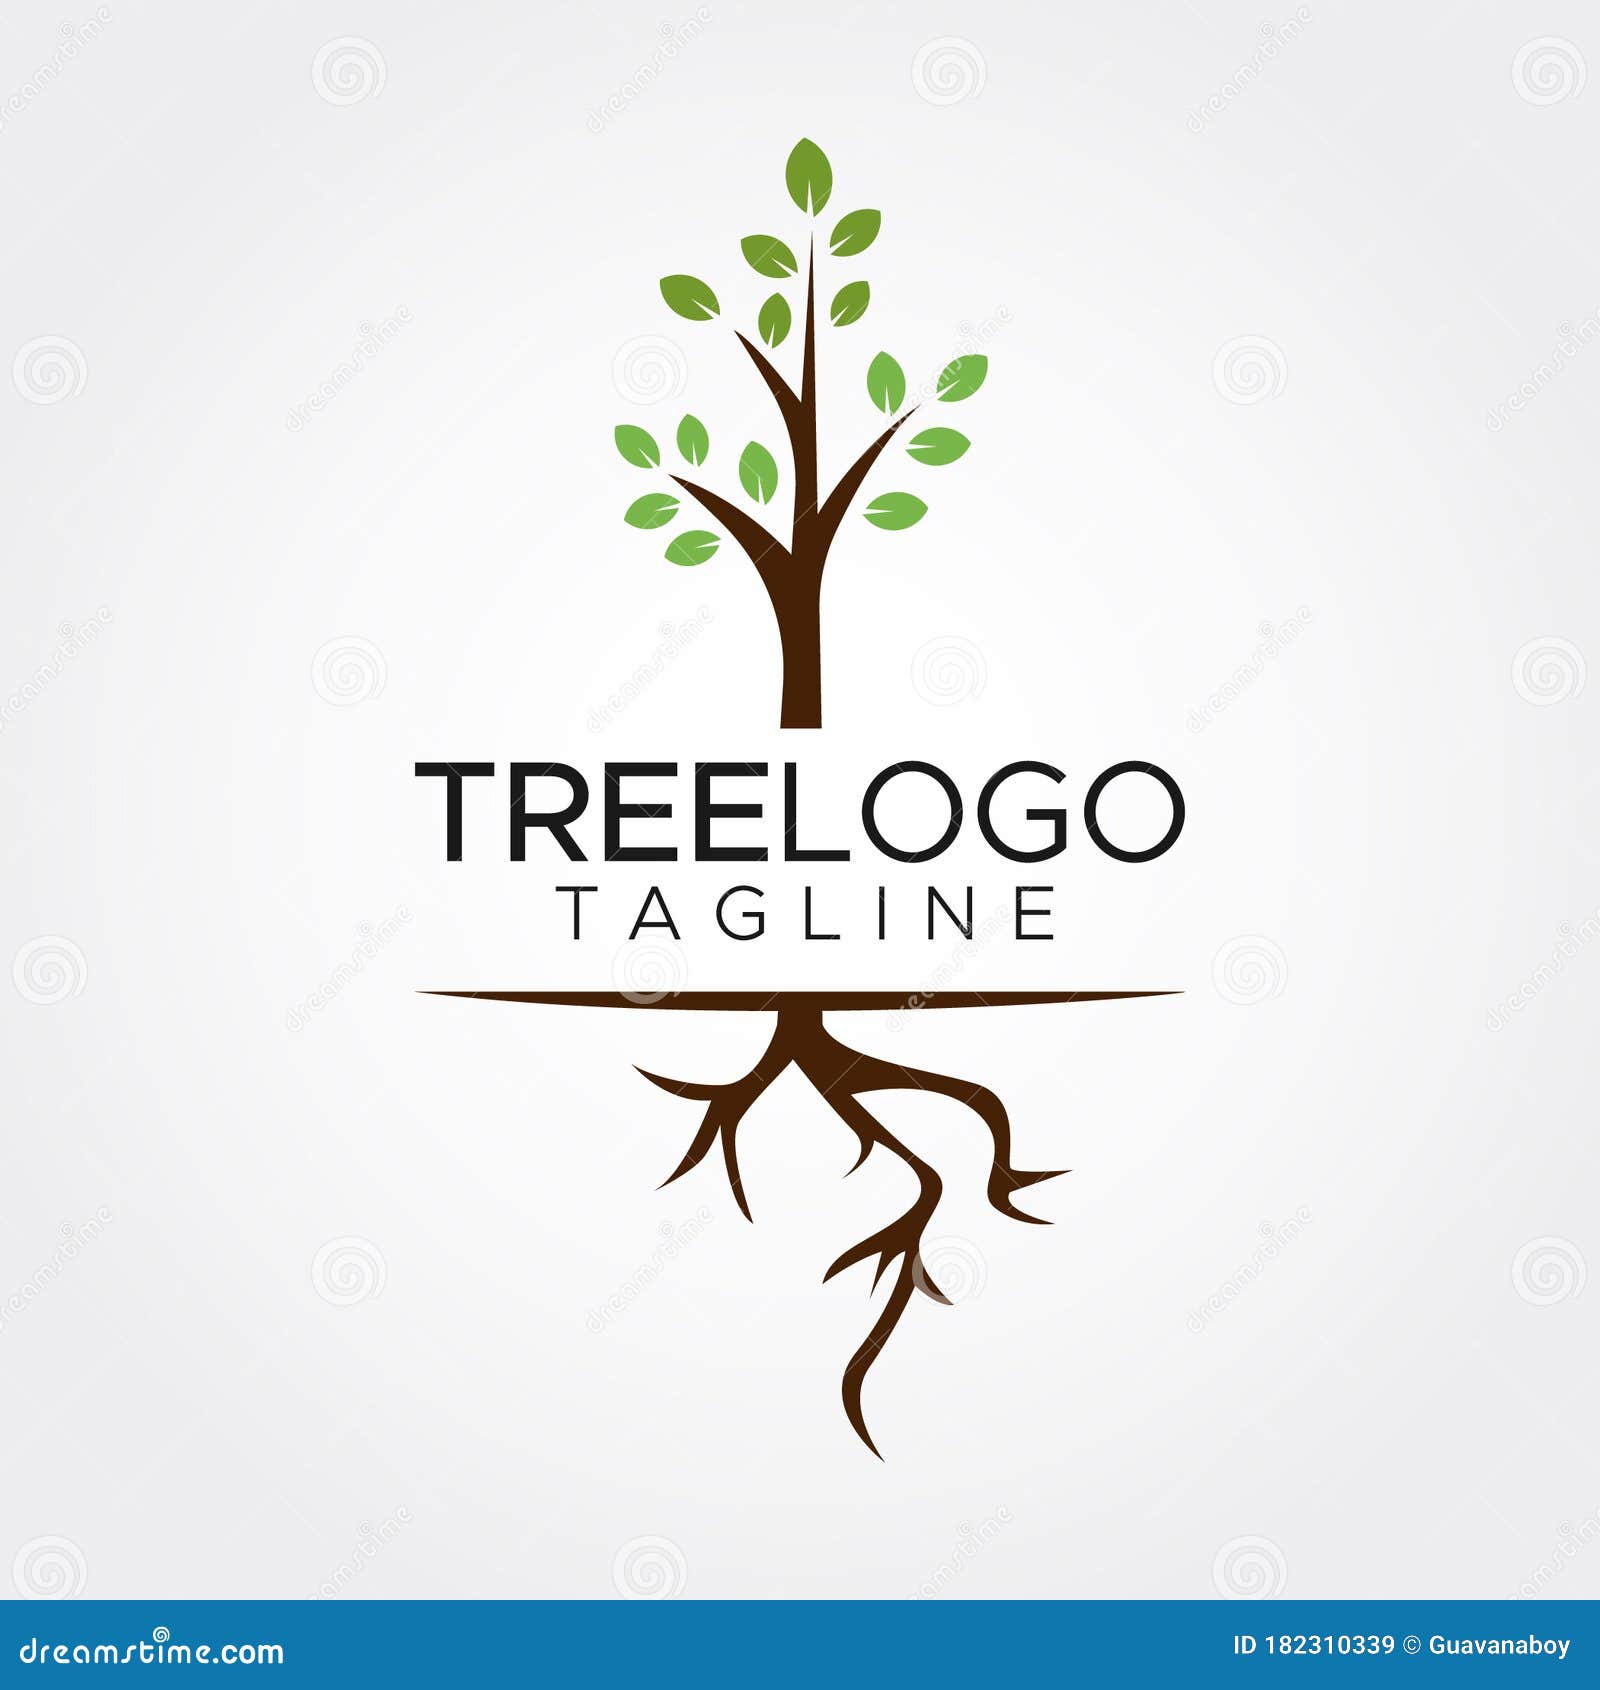 108,000 Tree logo Vector Images | Depositphotos